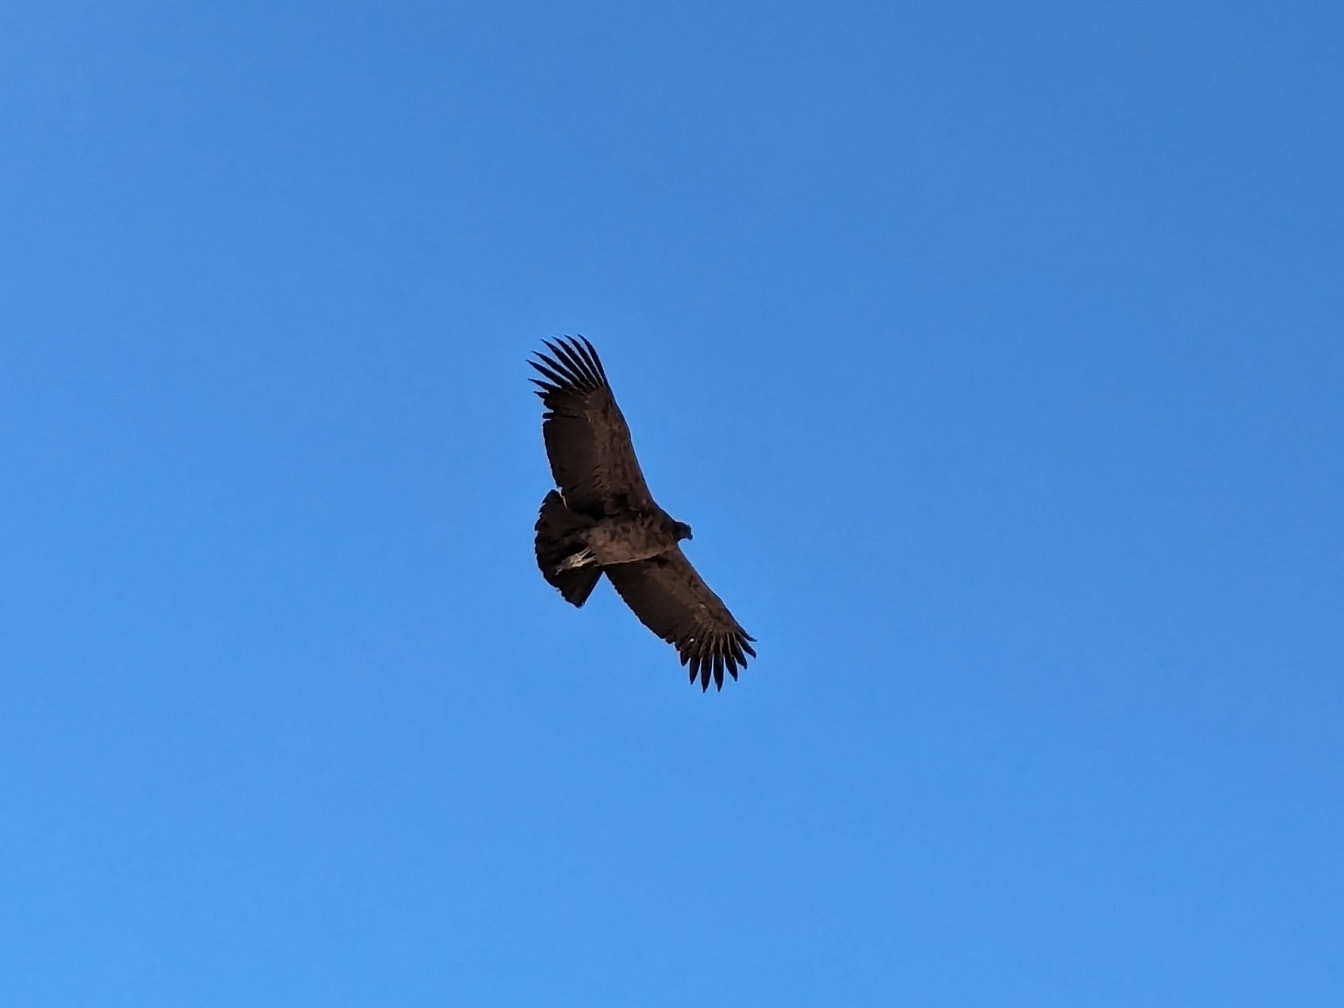 Młody kondor andyjski (Vultur gryphus) leci po błękitnym niebie